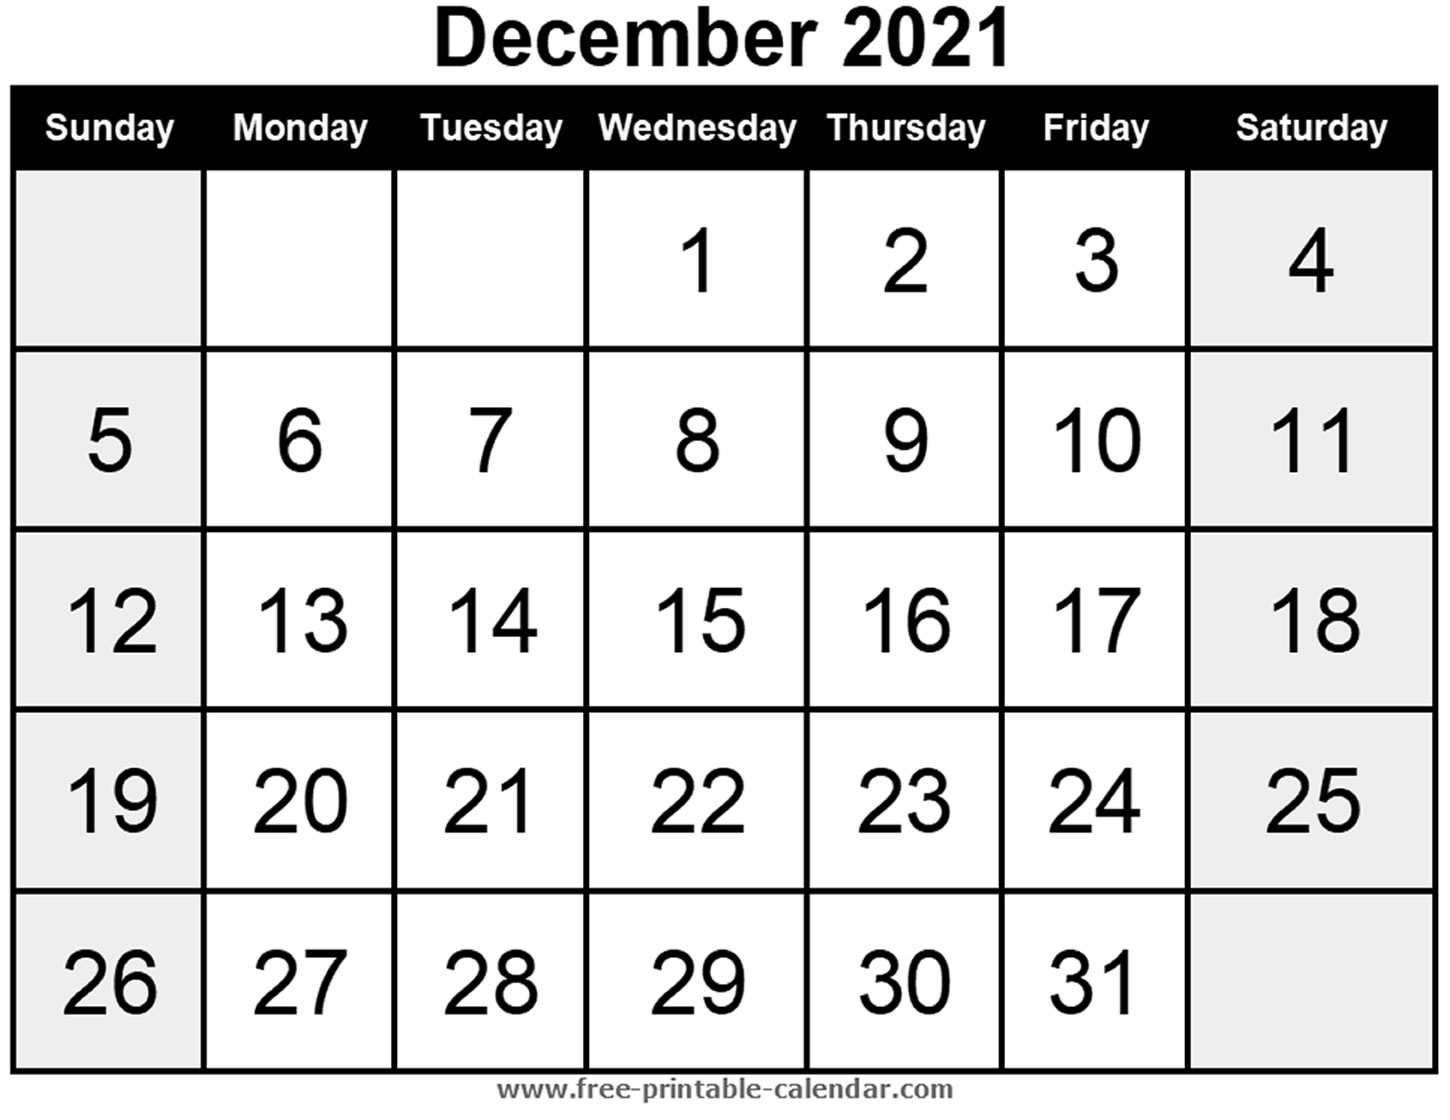 Blank Calendar December 2021 - Free-Printable-Calendar Free Printable December 2021 Calendar